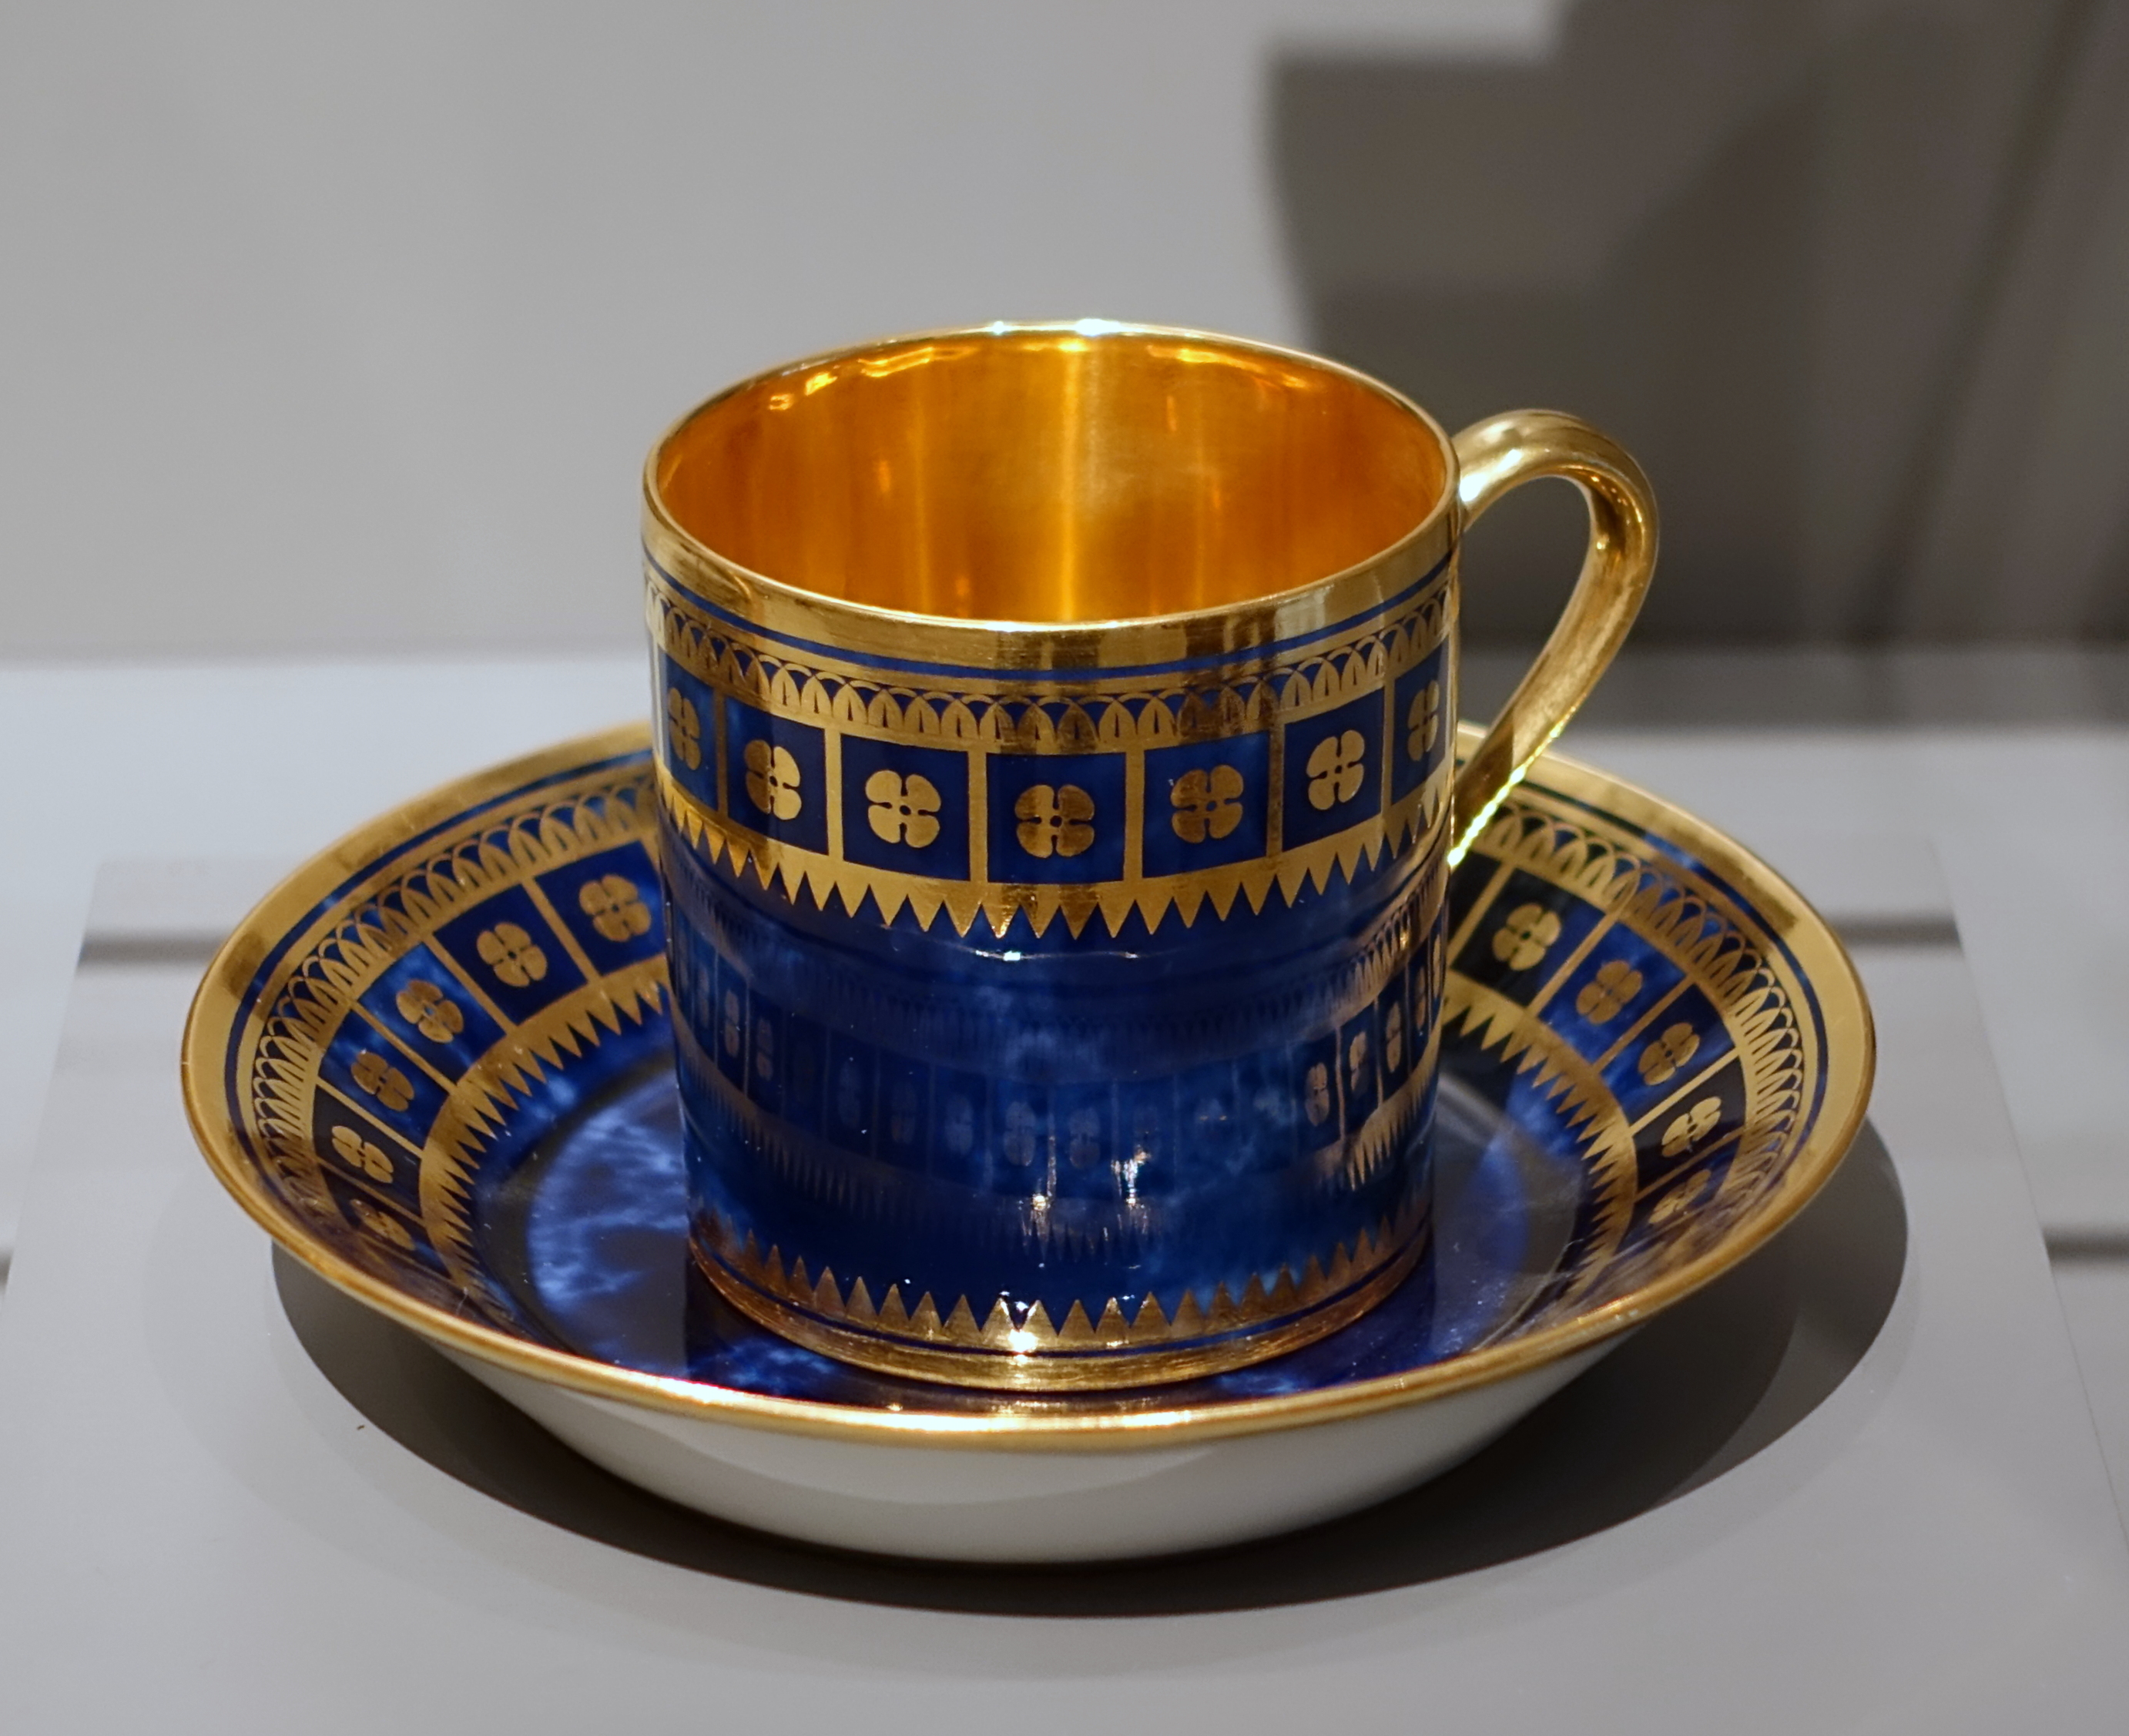 File:Cup and saucer, Sèvres Porcelain Factory, 1814-1824, hard-paste porcelain - Wadsworth Atheneum - Hartford, CT - DSC05517.jpg - Wikimedia Commons